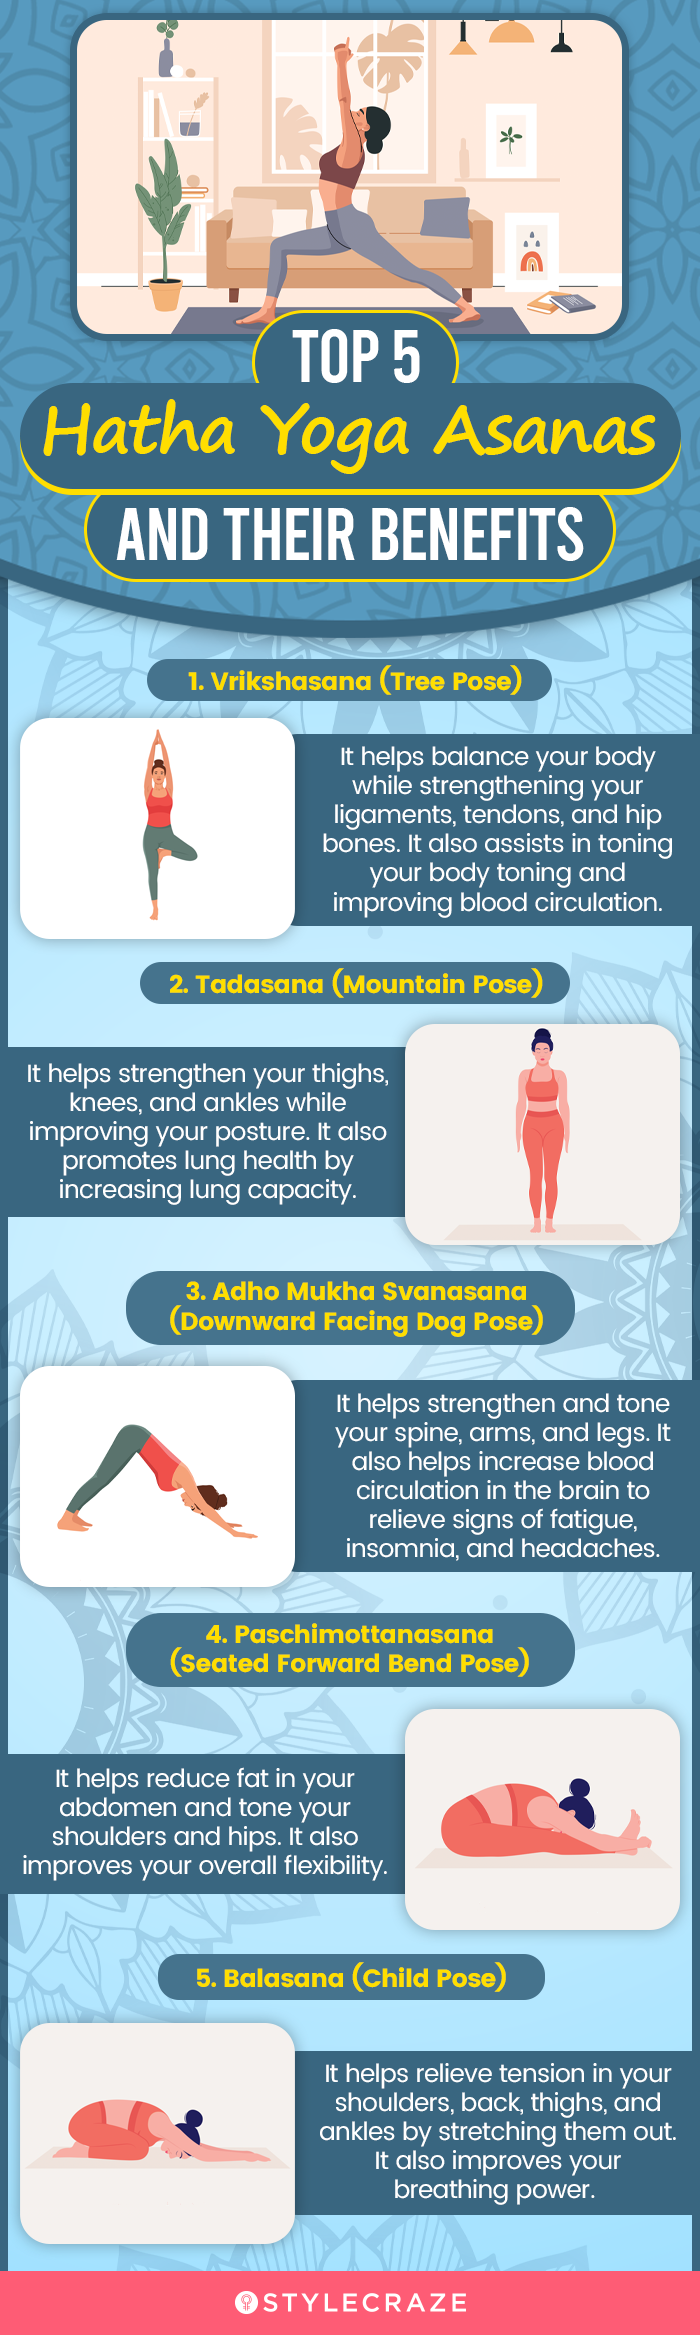 benefits of top 5 hatha yoga asanas (infographic)